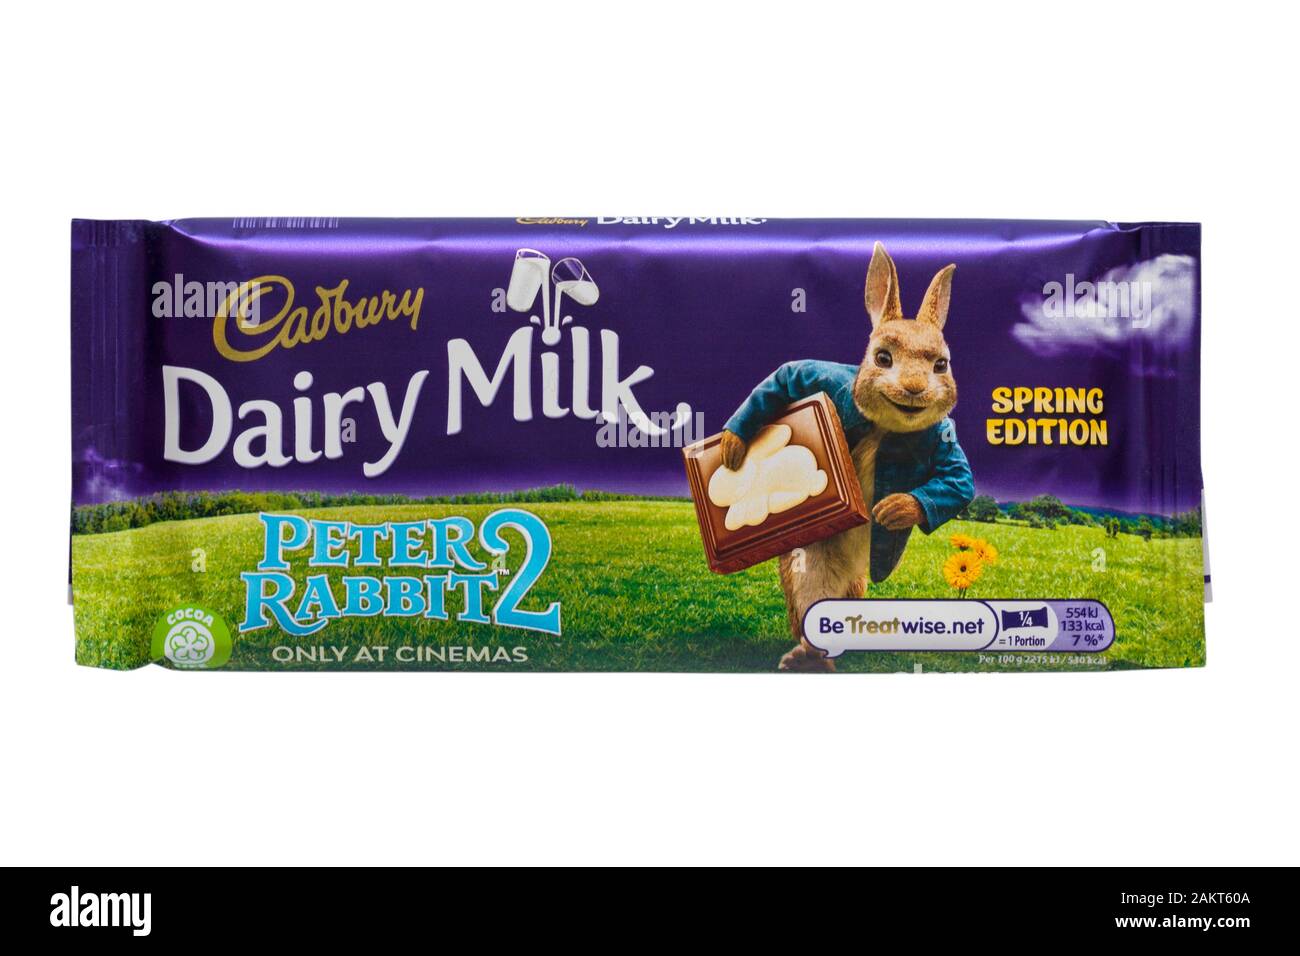 Cadbury Dairy Milk Spring Edition Peter Rabbit 2 Chocolate bar isolato su sfondo bianco - cioccolato al latte con cioccolato bianco Foto Stock